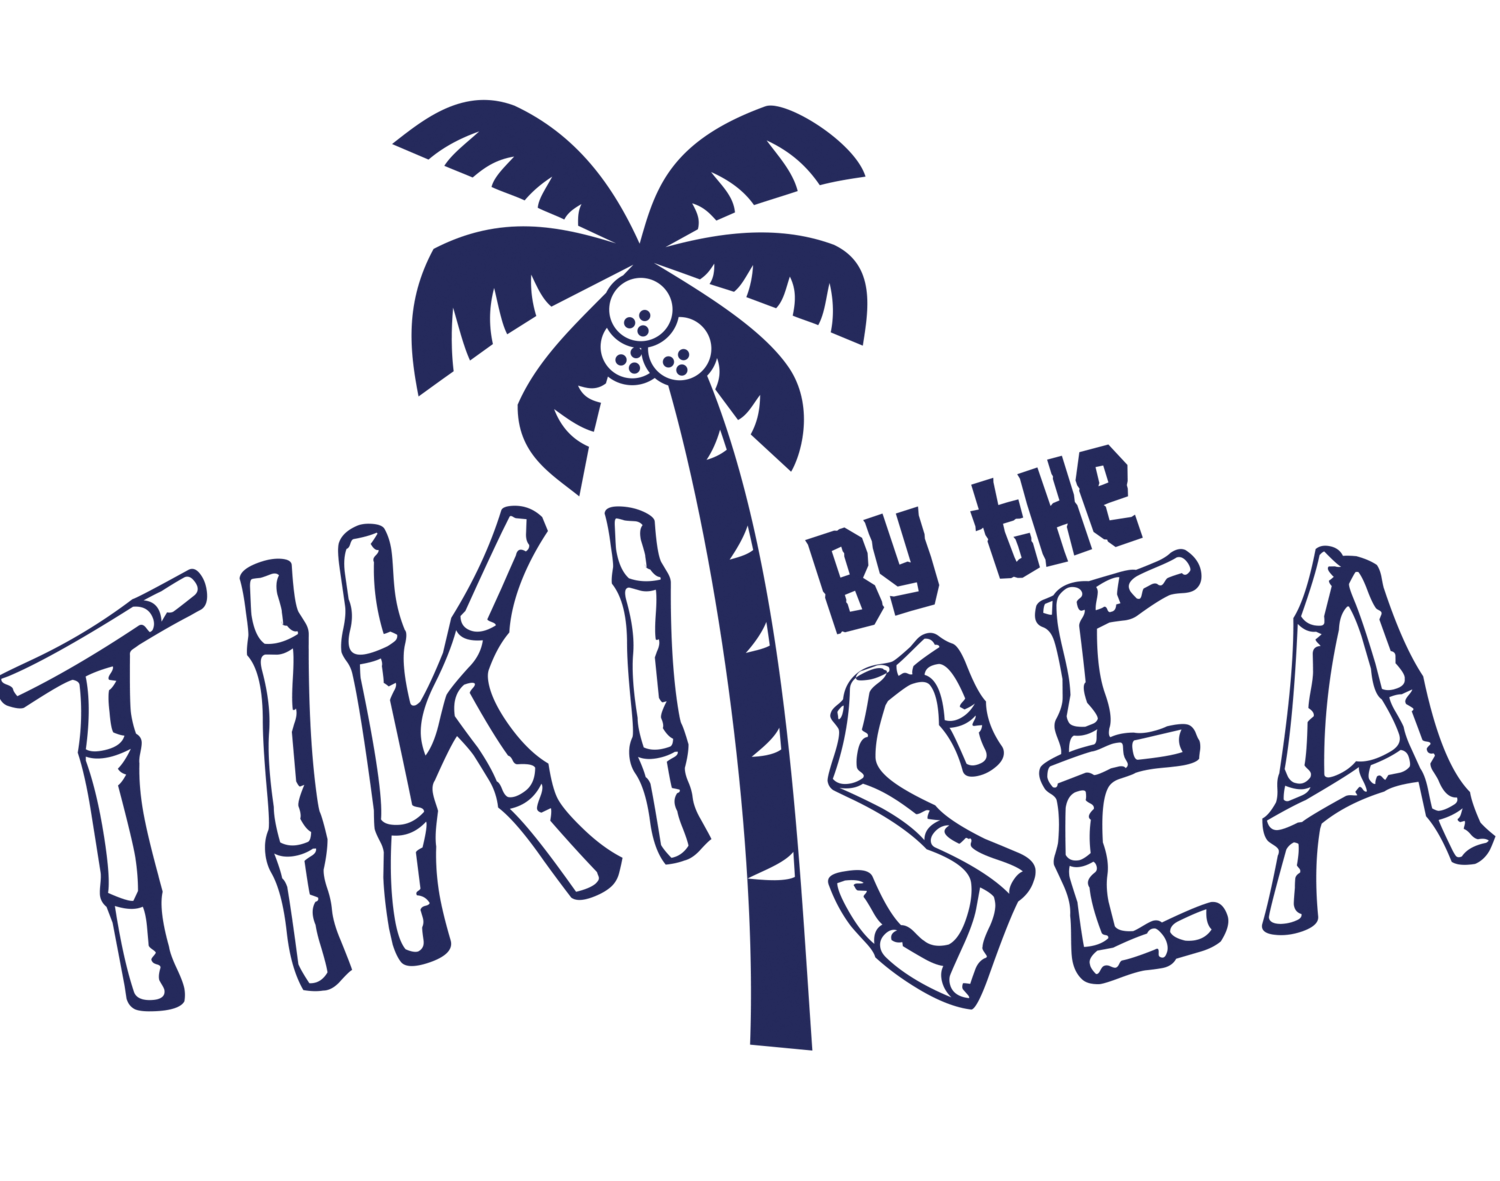 Tiki by the Sea